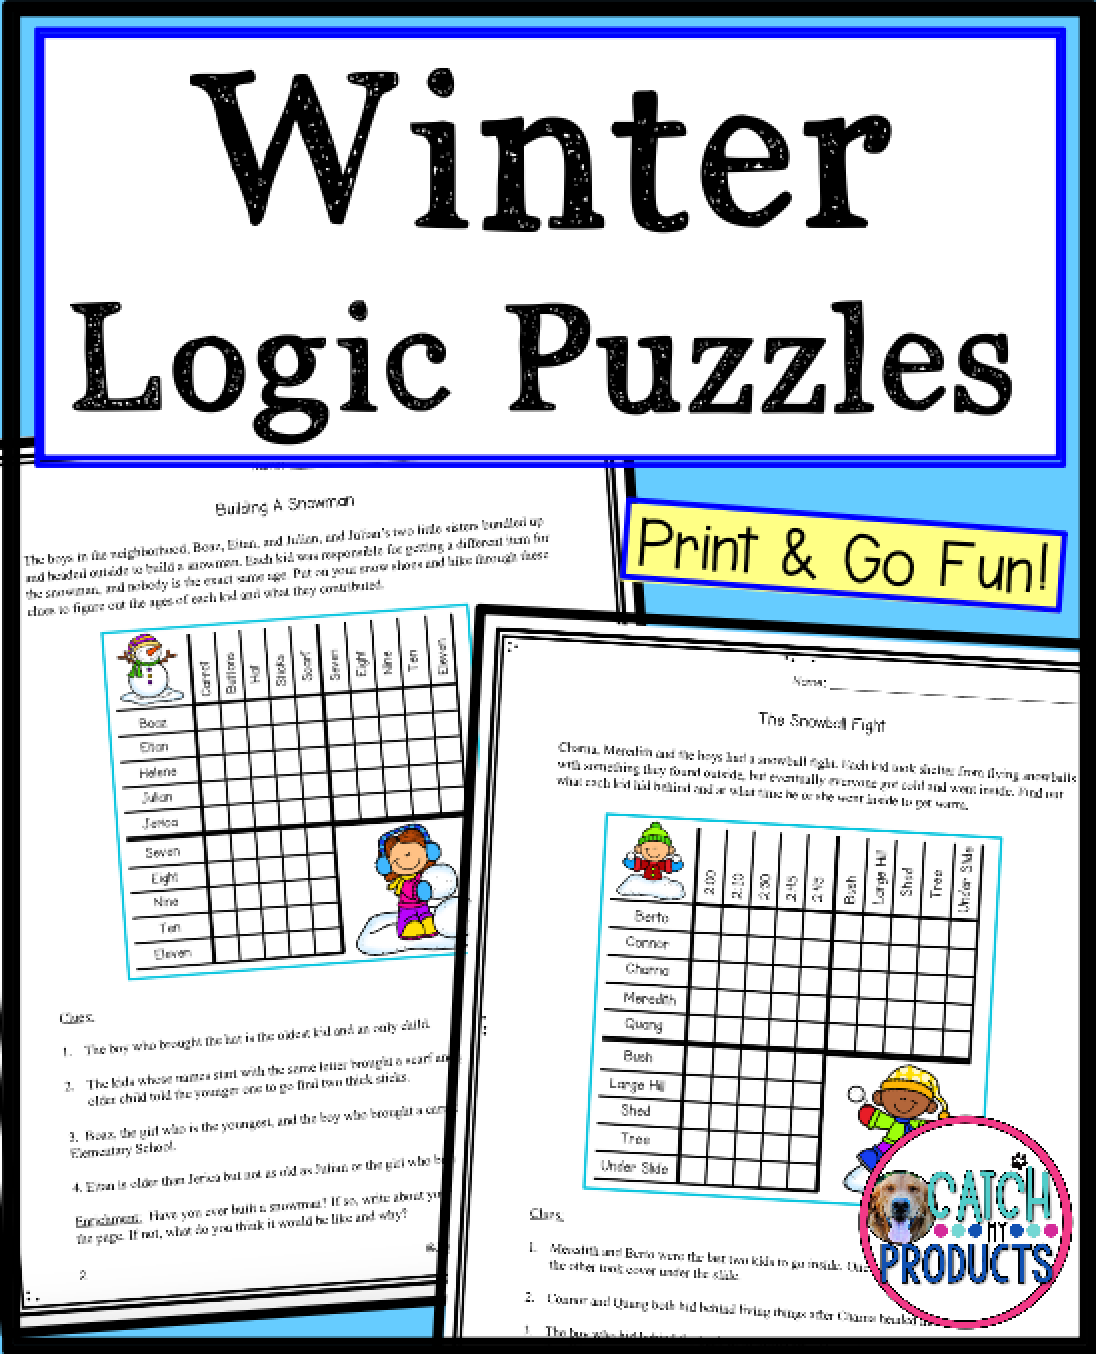 Winter Logic Puzzles Logic Puzzles Teaching Writing Elementary 